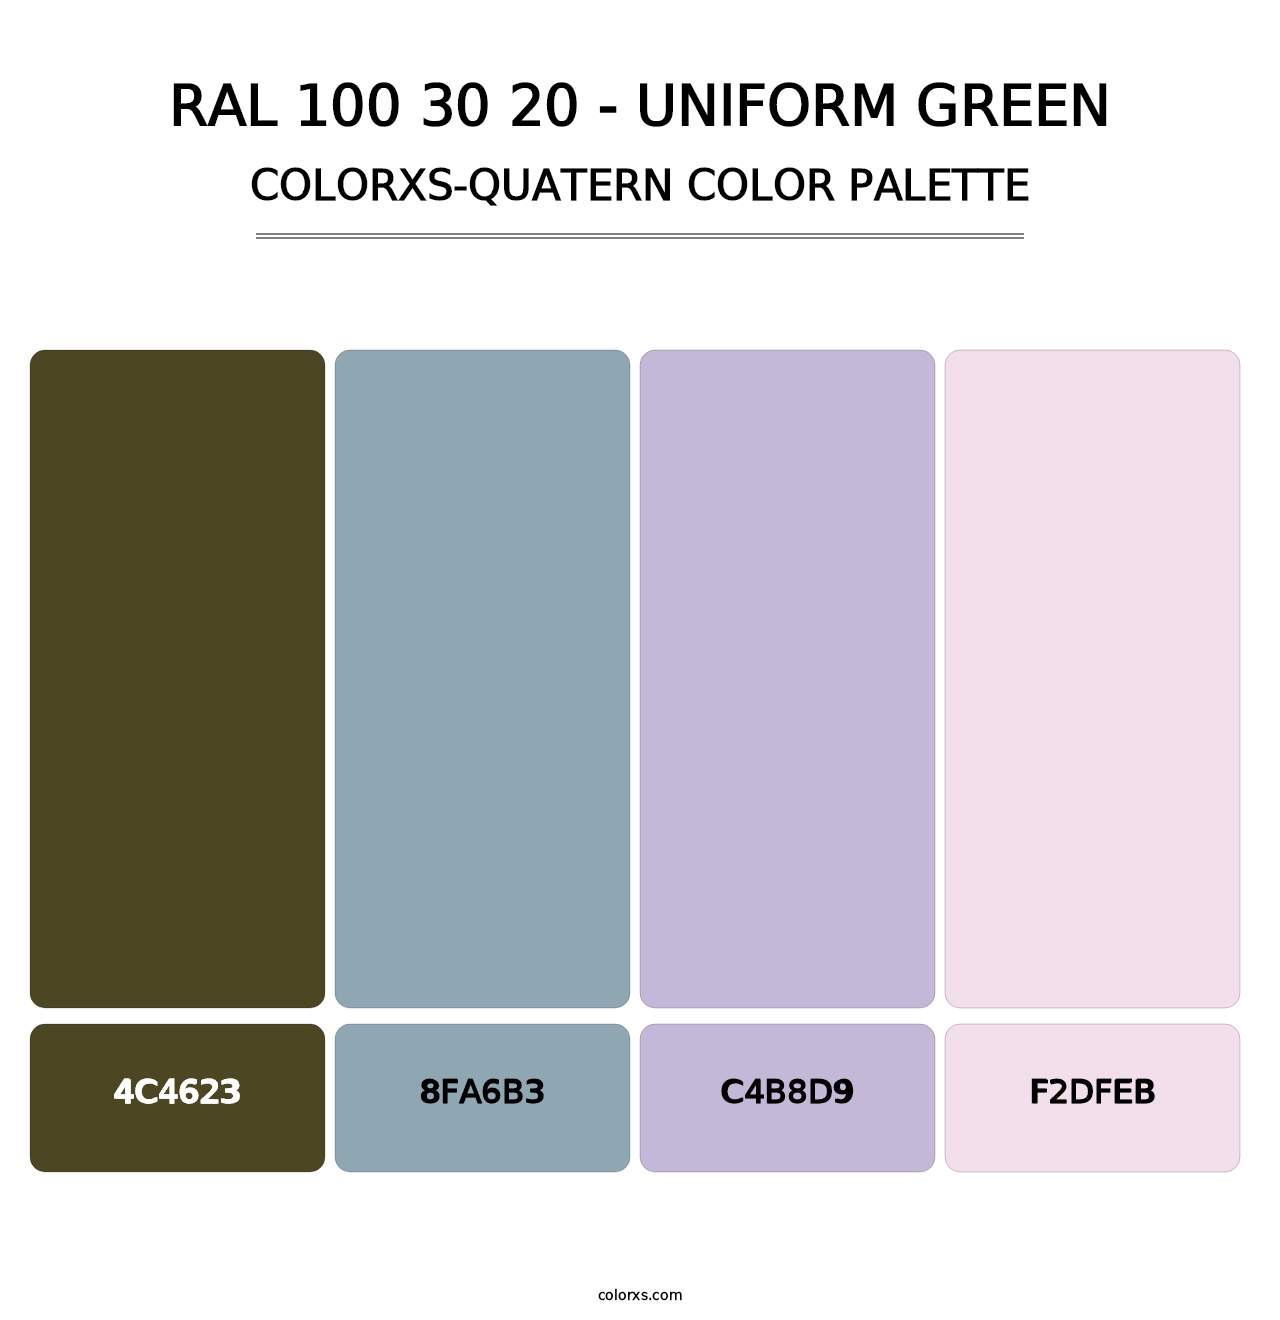 RAL 100 30 20 - Uniform Green - Colorxs Quatern Palette